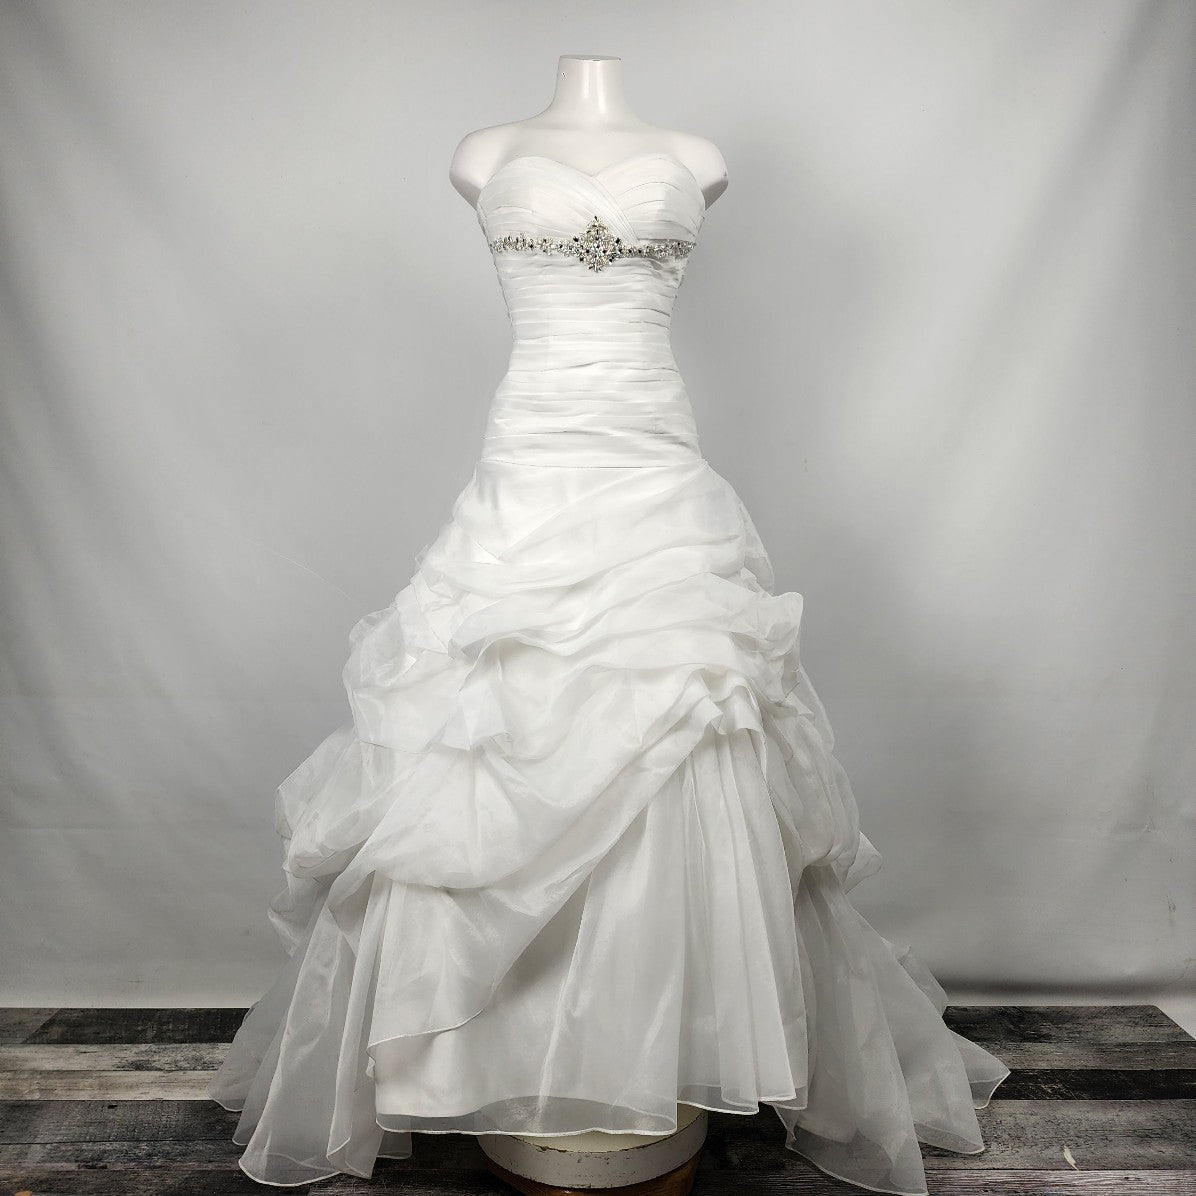 Madison Collection White Rhinestones Ruffle Skirt Wedding Gown Dress Size S